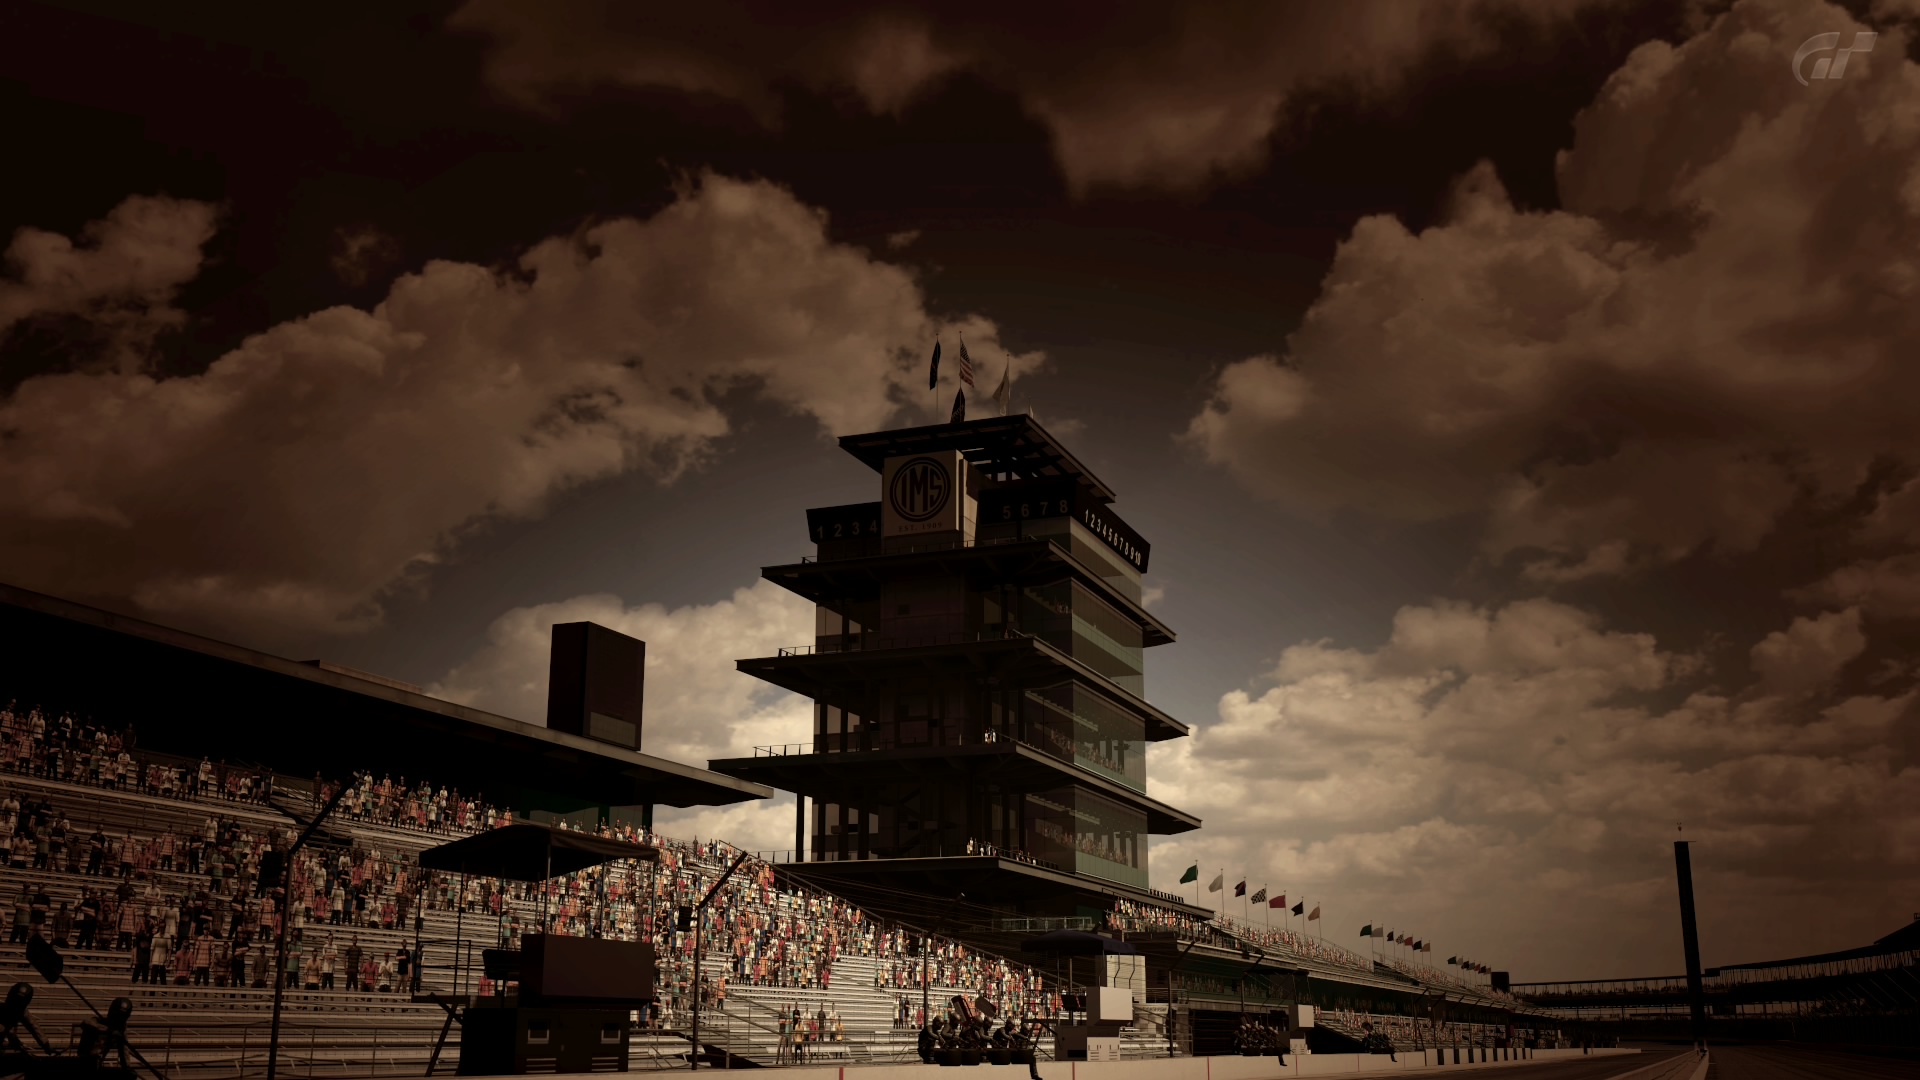 New Indianapolis Motor Speedway Background Racetrack Wallpaper